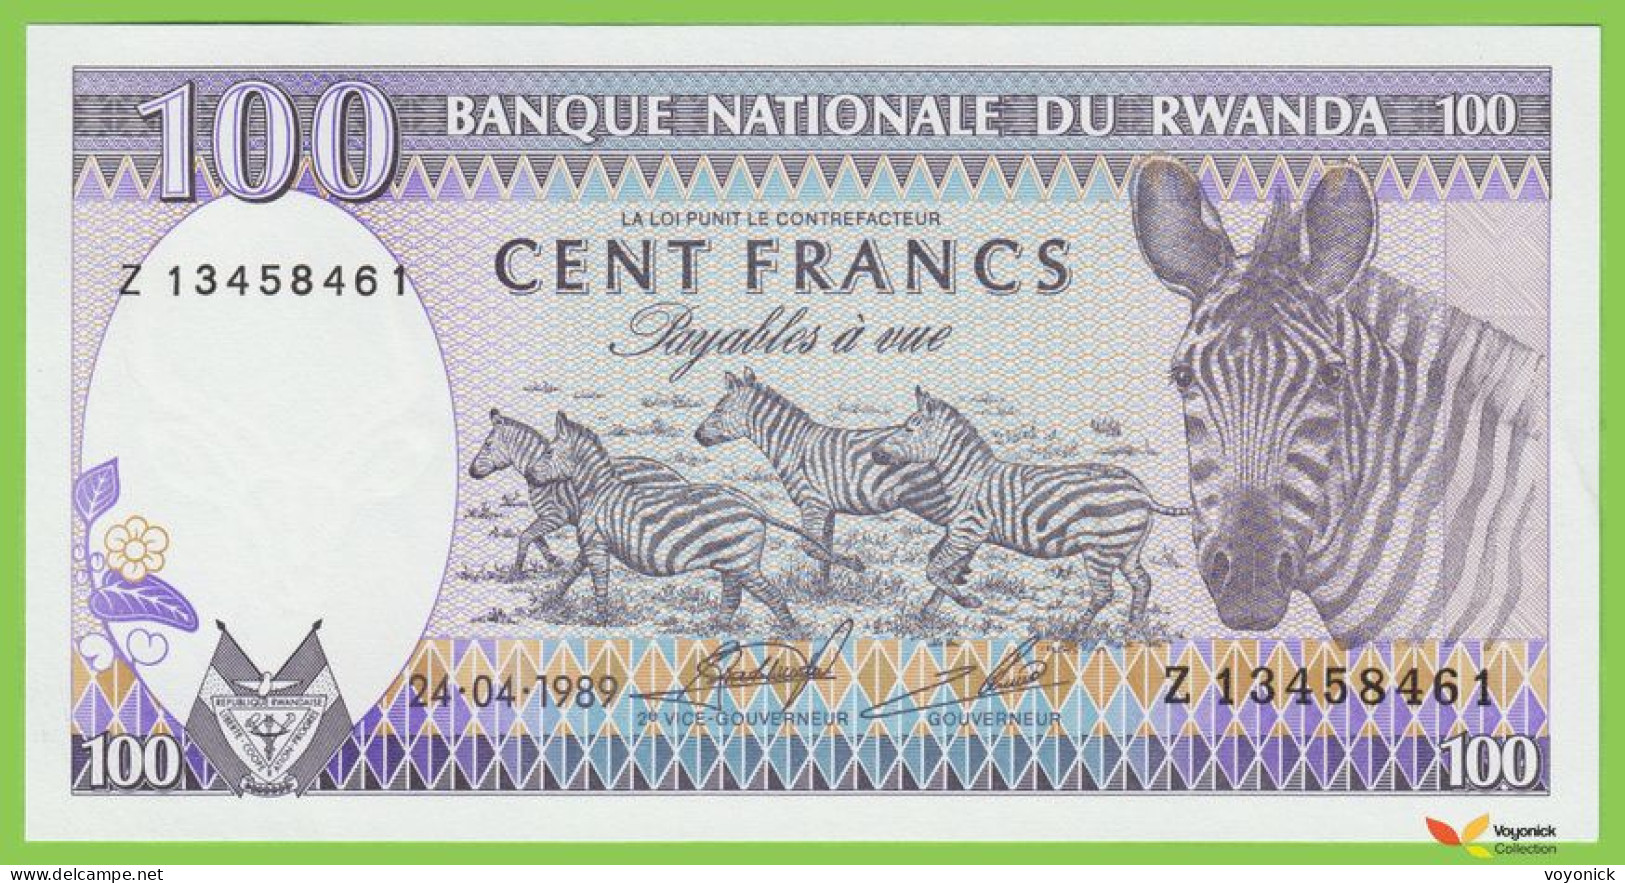 Voyo RWANDA 100 Francs 1989 P19 B119a Z UNC - Rwanda